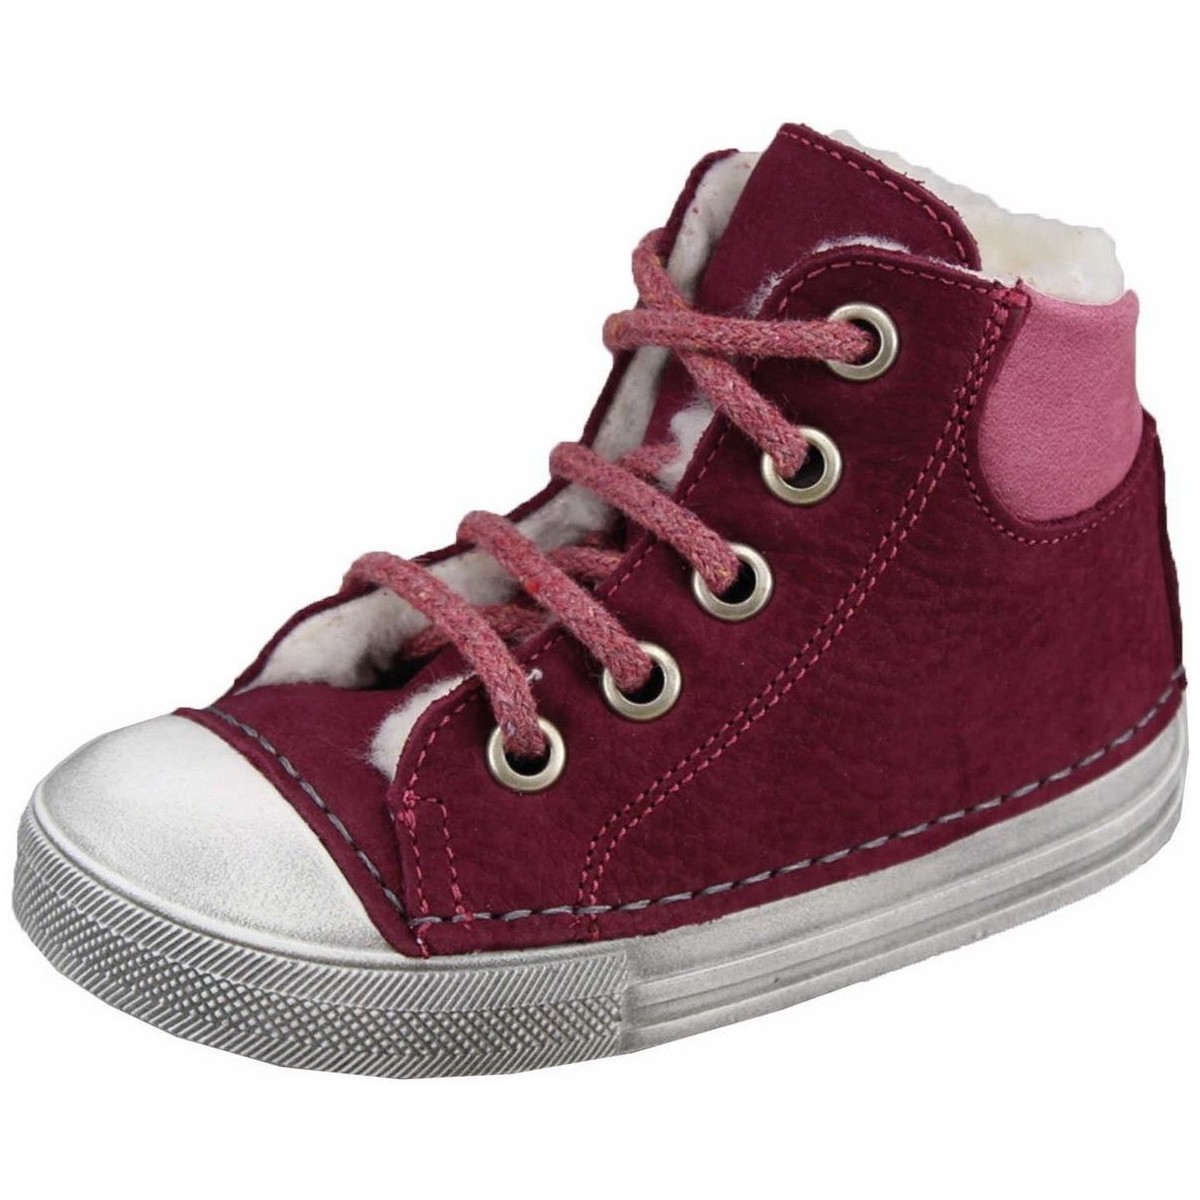 Schuhe Mädchen Babyschuhe Däumling Schnuerstiefel barolo (heide-brombeere) 100351M-01-22 Rot